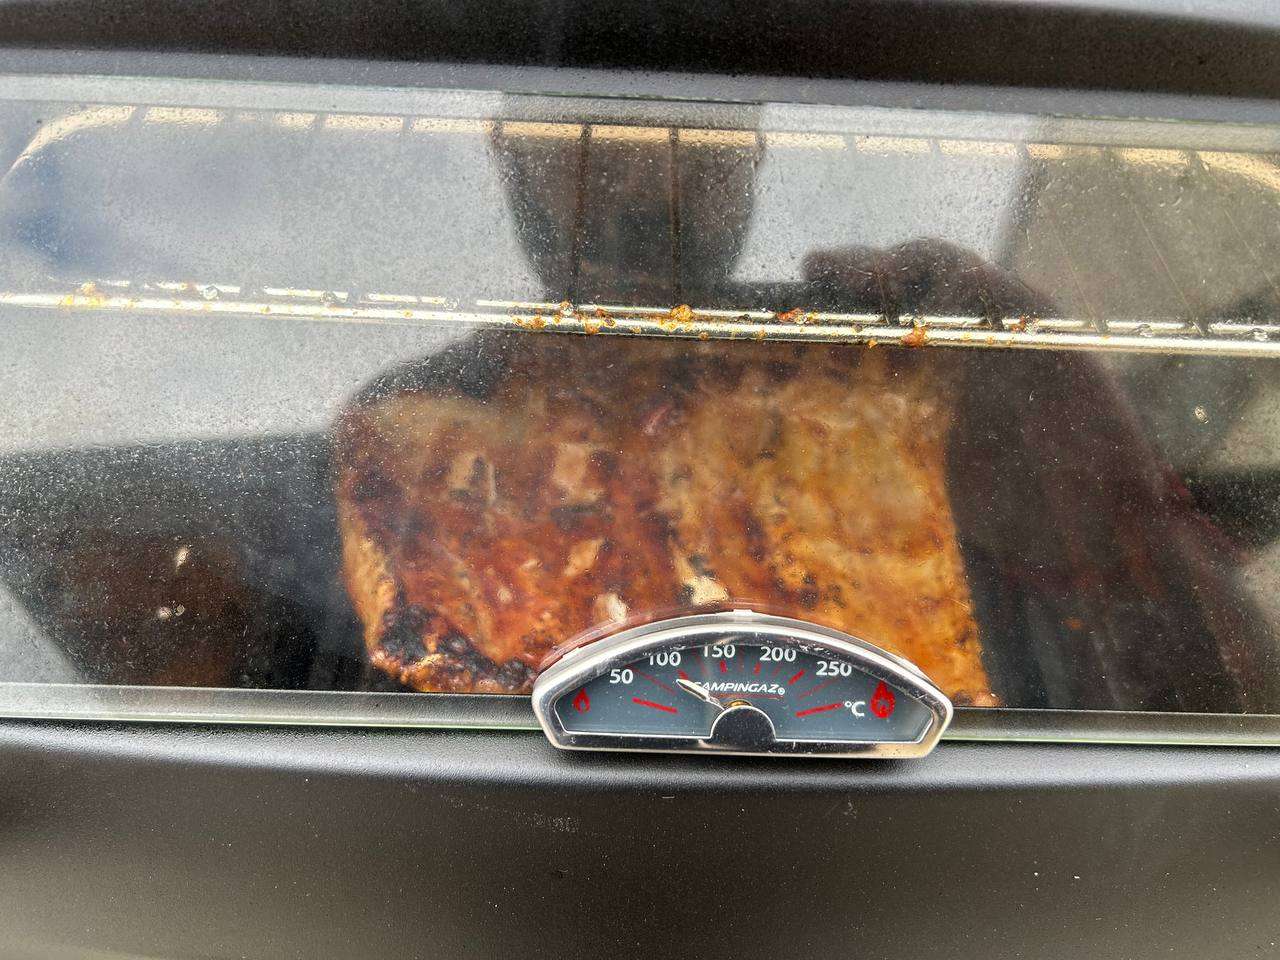 Barbecue Campingaz Texas Revolution: termometro